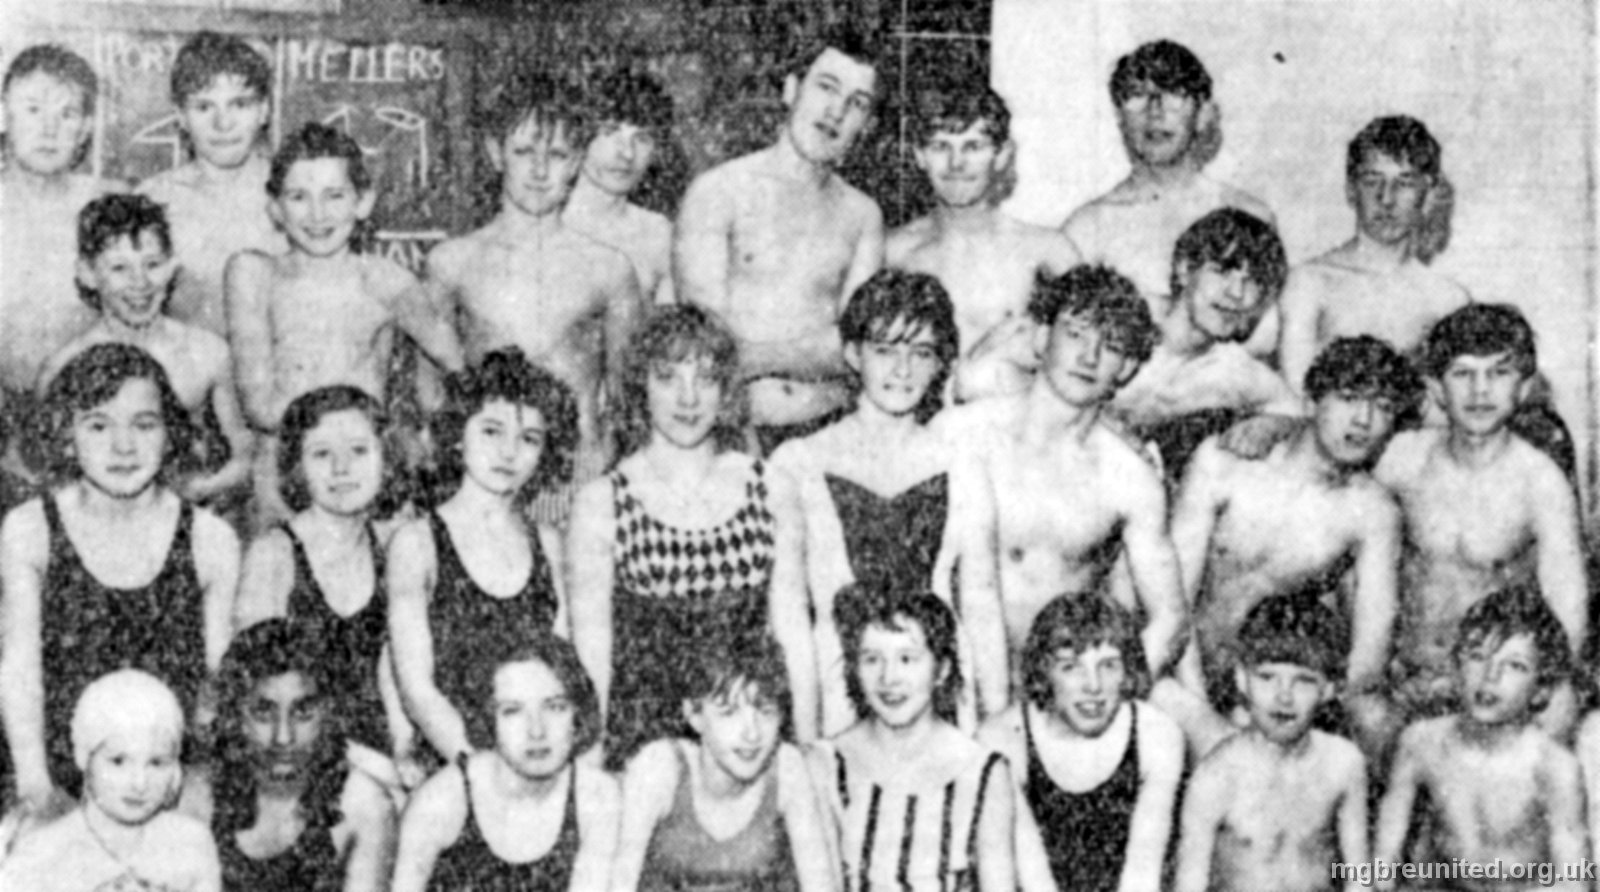 1963 Swimming Gala at Noel Street Baths BACK TWO ROWS: 7 Peter Bradsha? (head to one side), 8 Kevin Whitt, 9 Philip Dewey? (Specs), dk boy leaning forward. 10 dk 2nd ROW: 1 Vicky Moore, 3 Suzanne Eaton, 4 Veronica Wysocki, 5 dk, 6 Patrick Elvin FRONT ROW: 2 Balbir Chelley, 5 Pam McClure, 6 Joy Reavill,